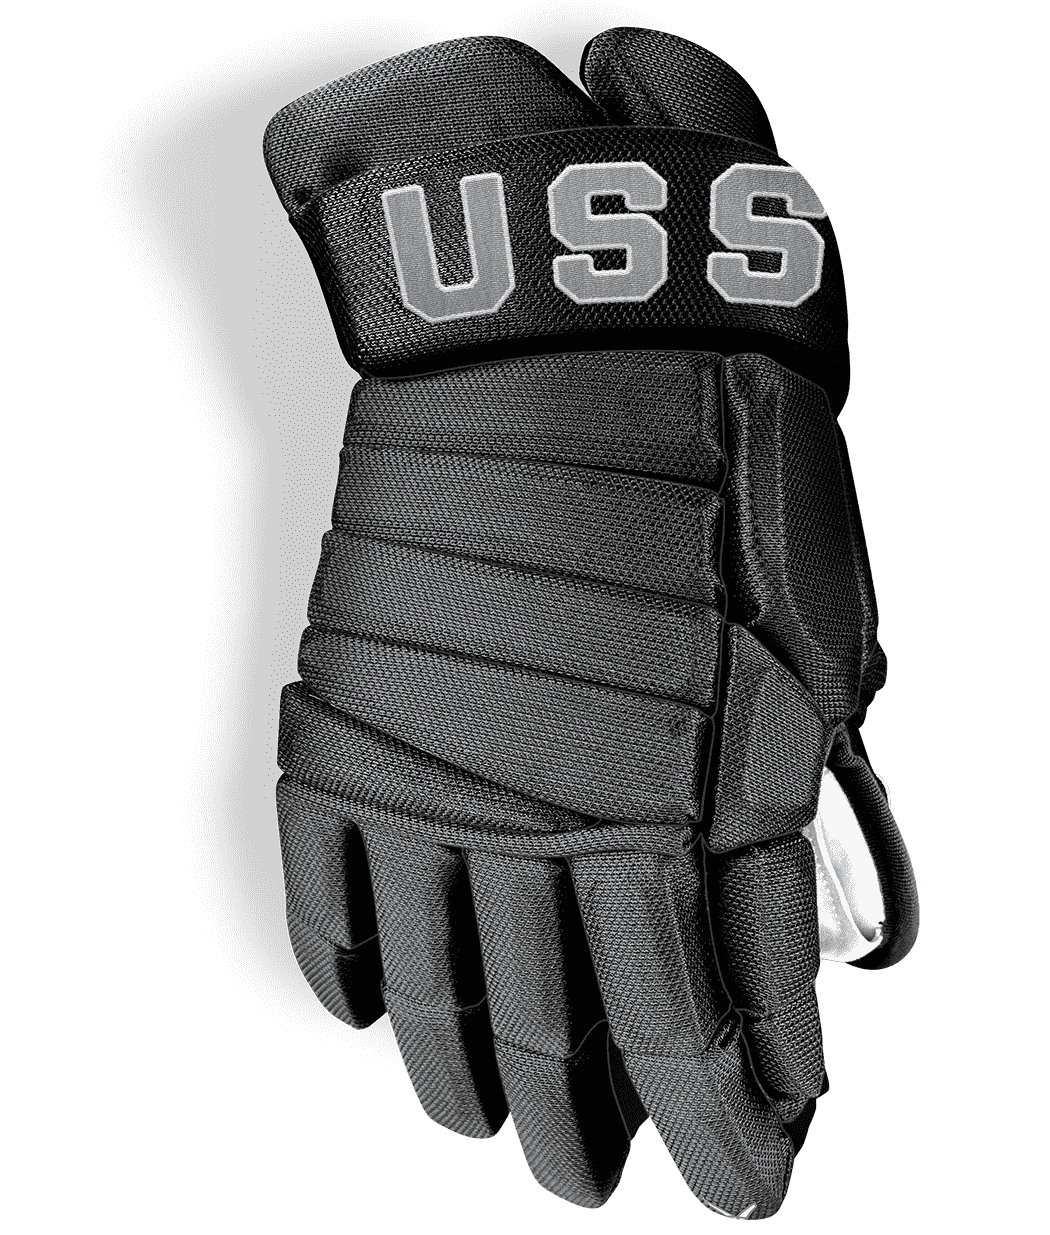 US Secret Service Team Glove